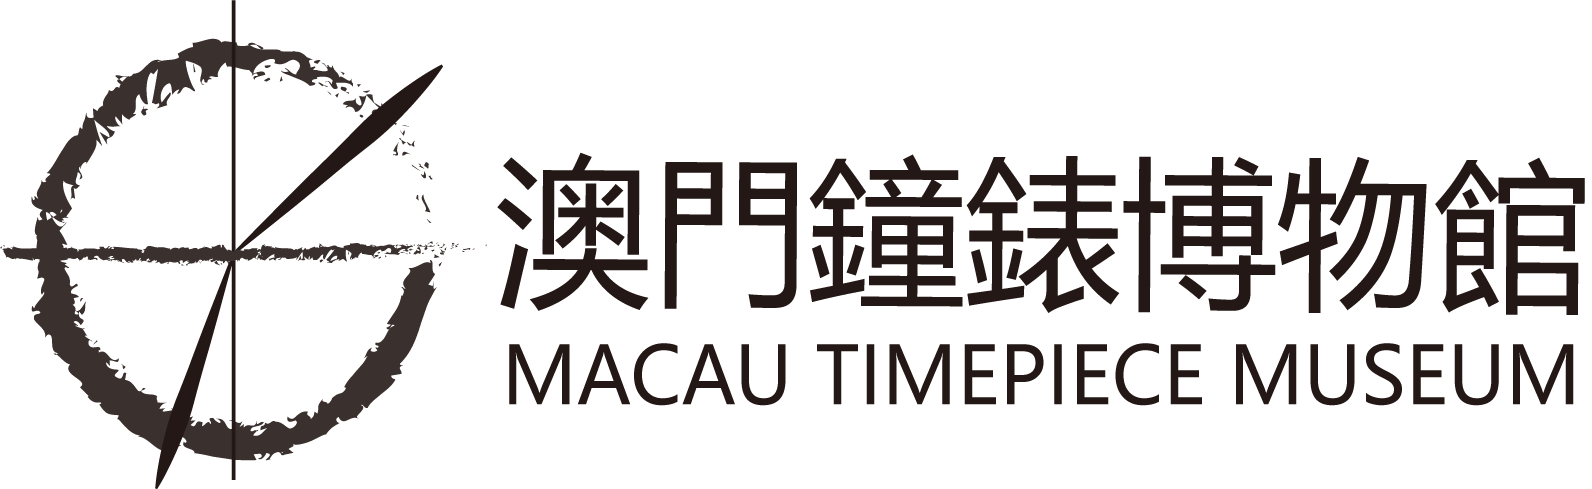 MacauTimepieceMuseum Logo Traditional-Small logos.png